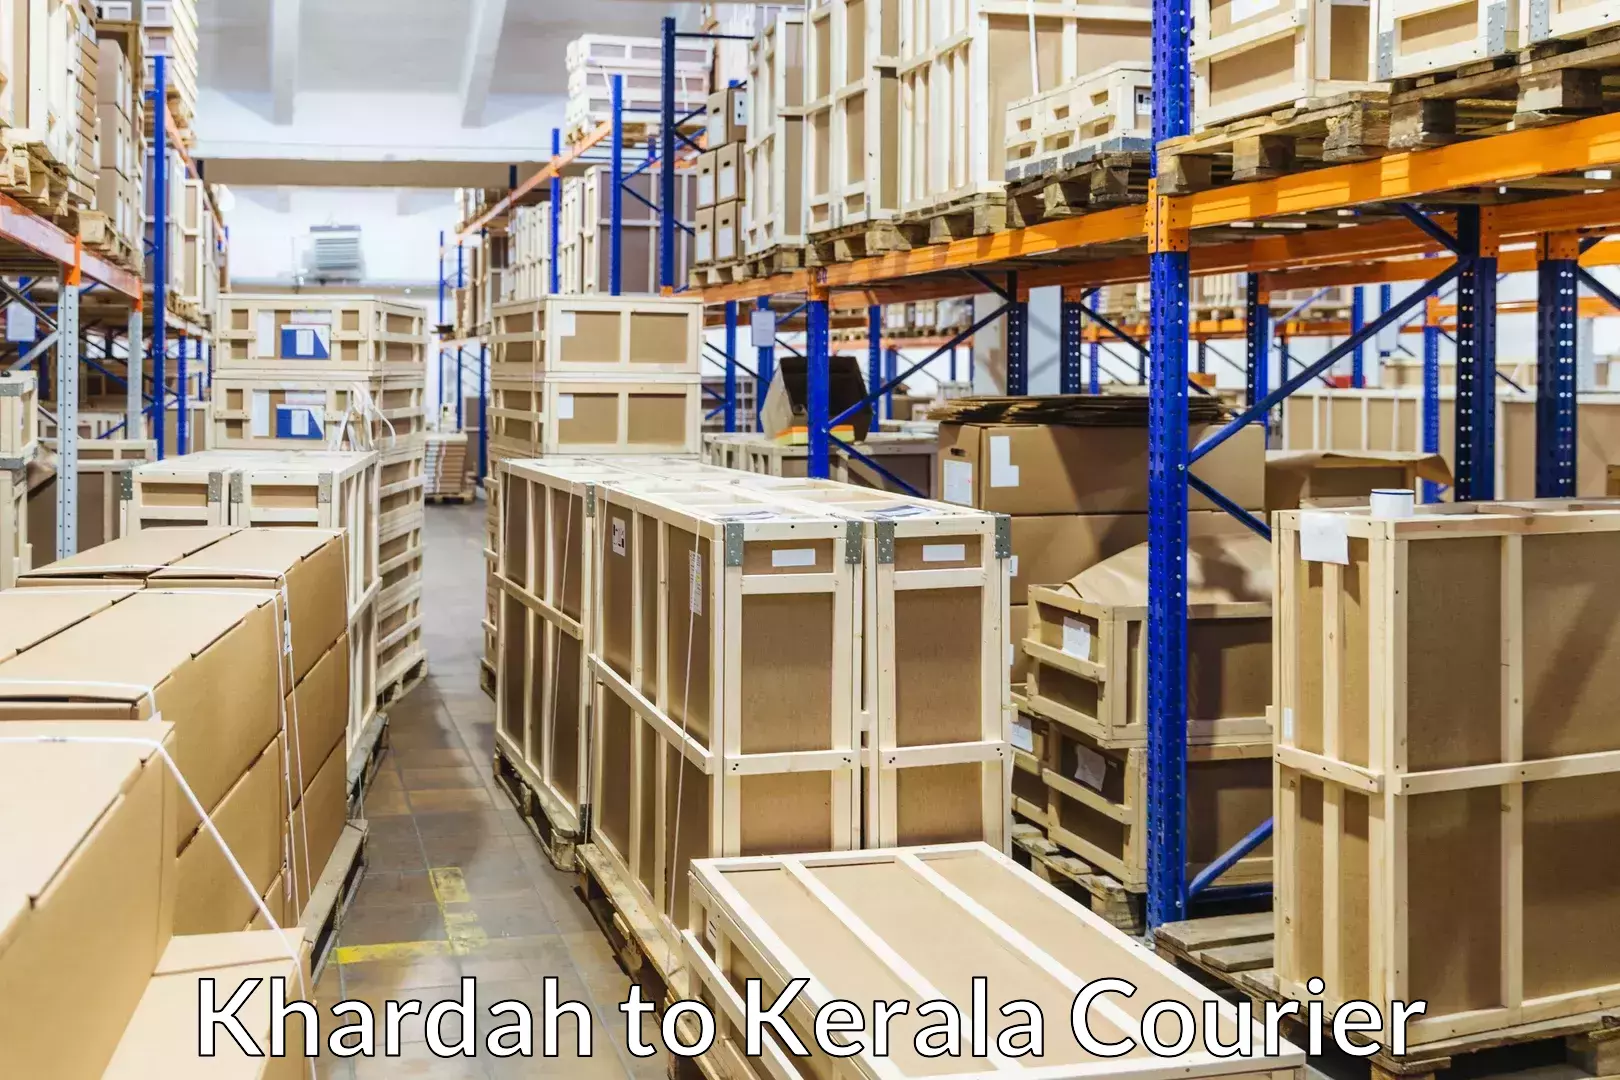 Seamless moving process Khardah to Kerala